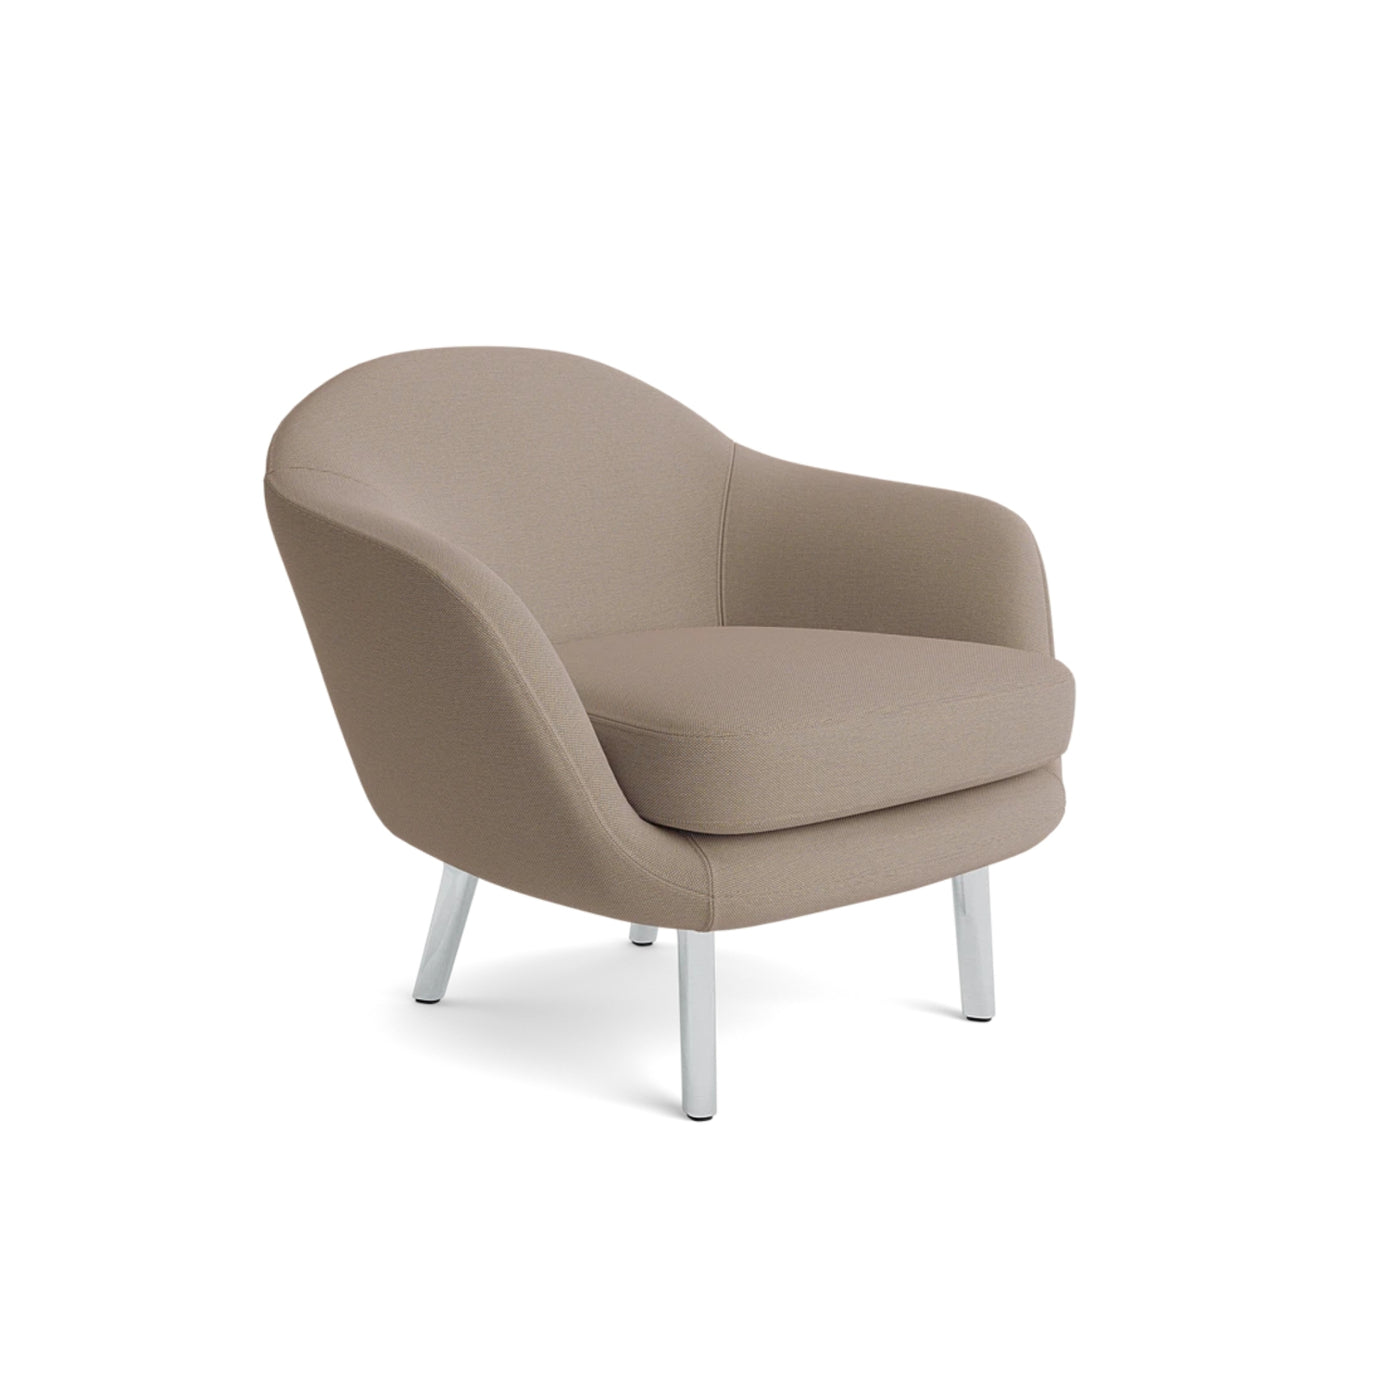 Normann Copenhagen Sum Armchair. Made to order at someday designs. #colour_steelcut-trio-426